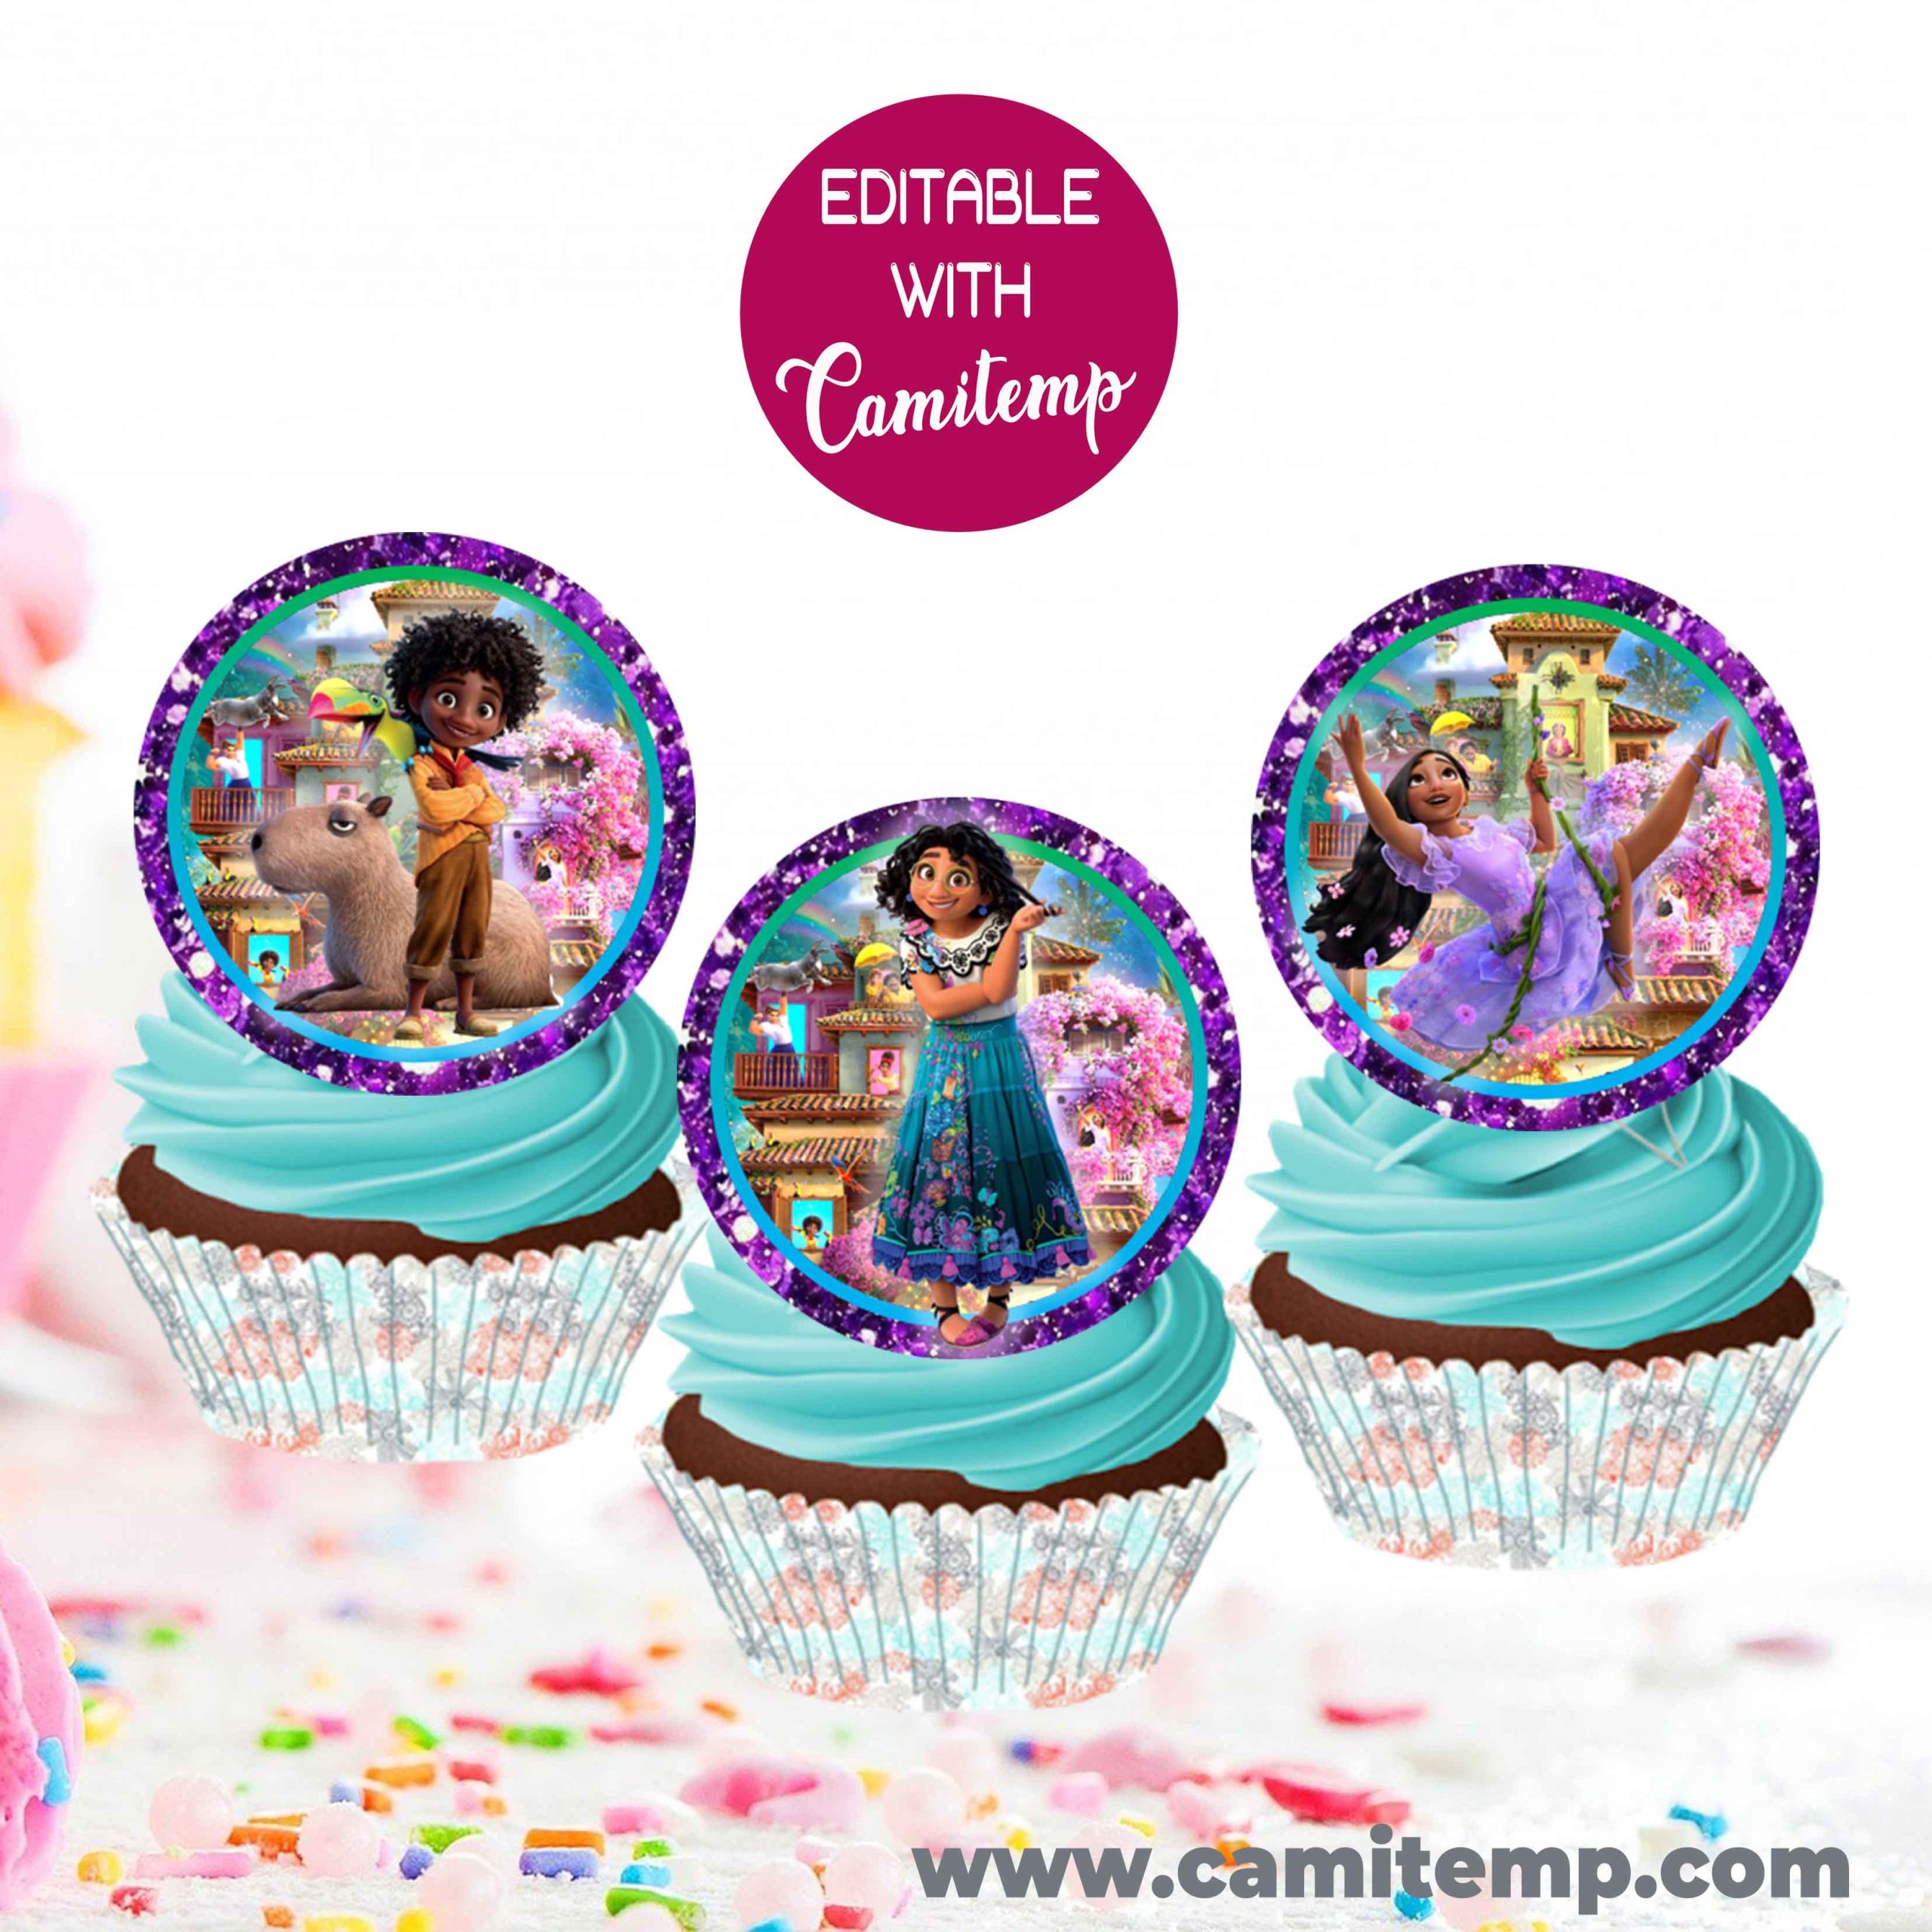 Encanto | Cupcake Toppers